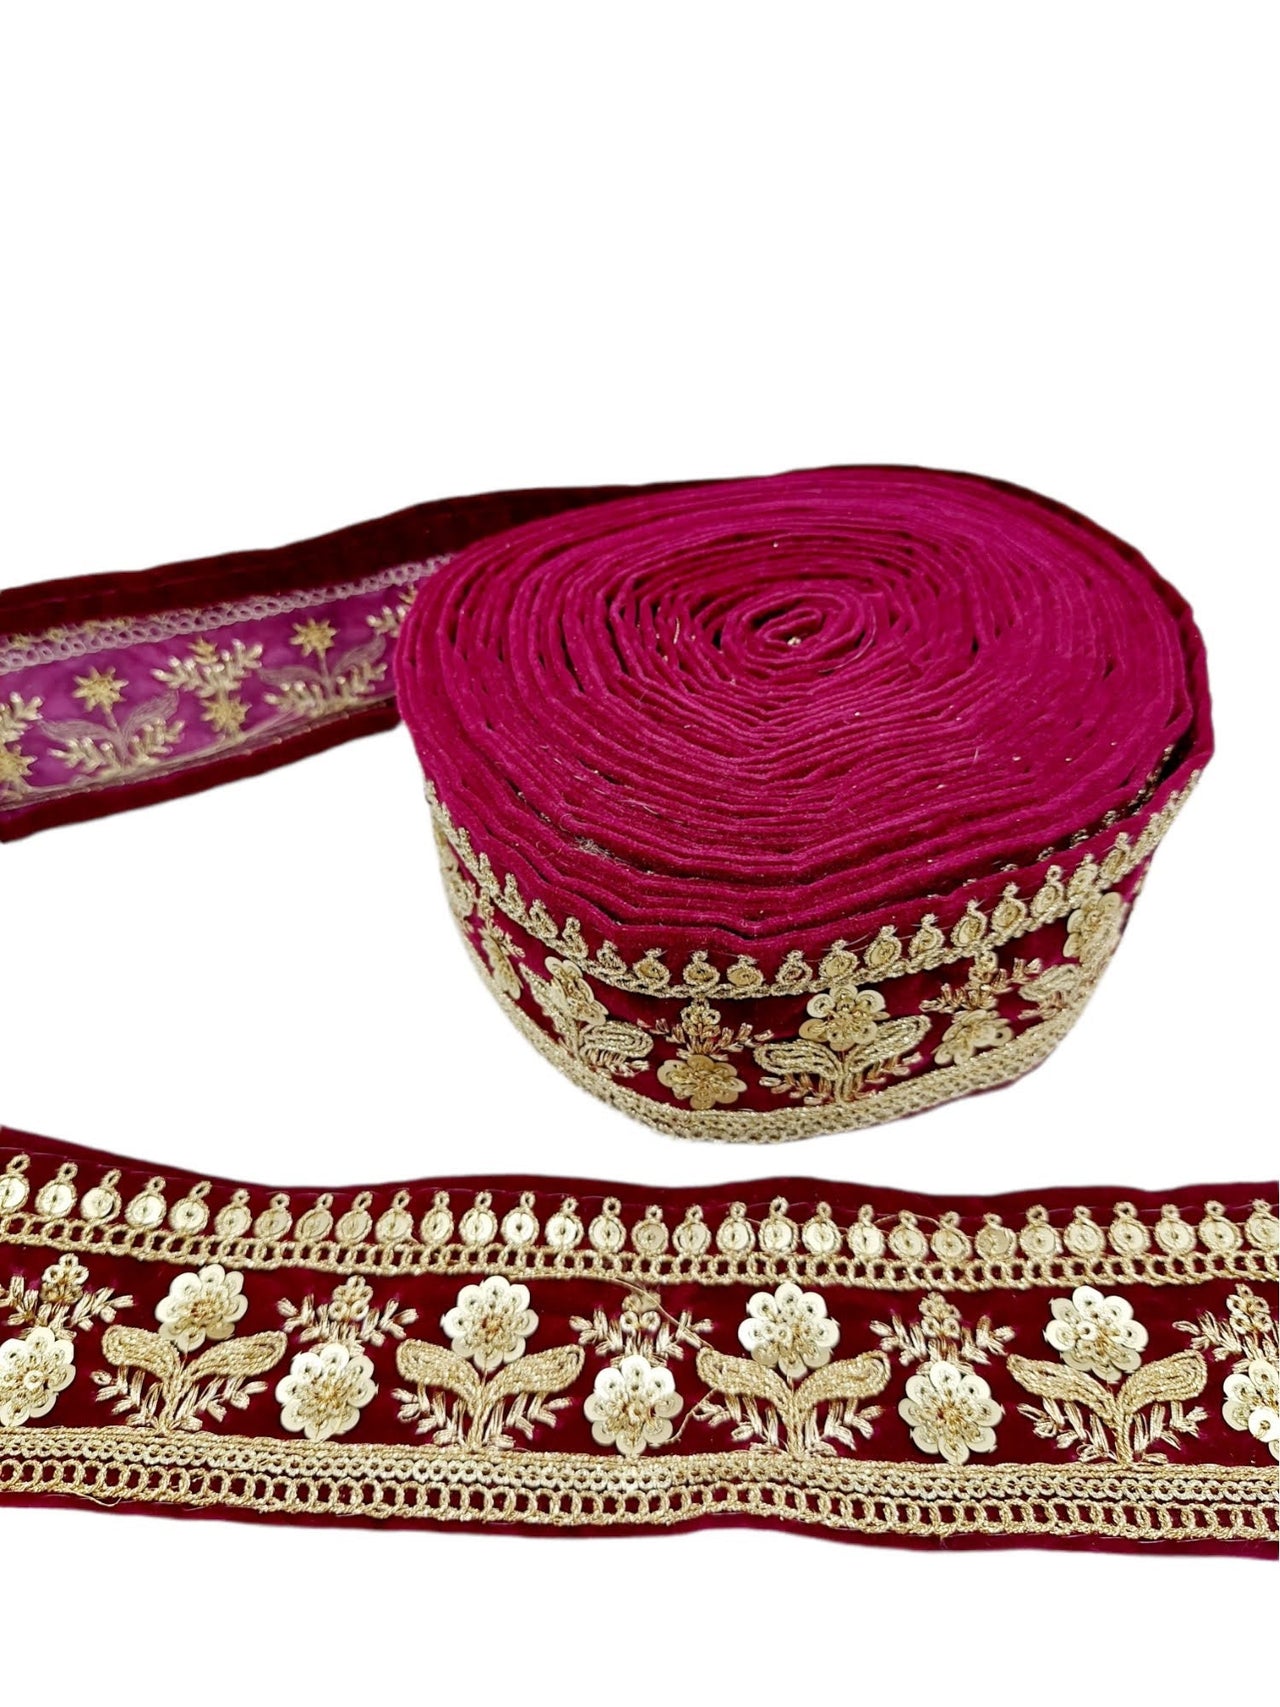 9 Yards Velvet Fabric Embroidered Trim Sequins Lace Sewing Trimming Sari Trim Indian Border